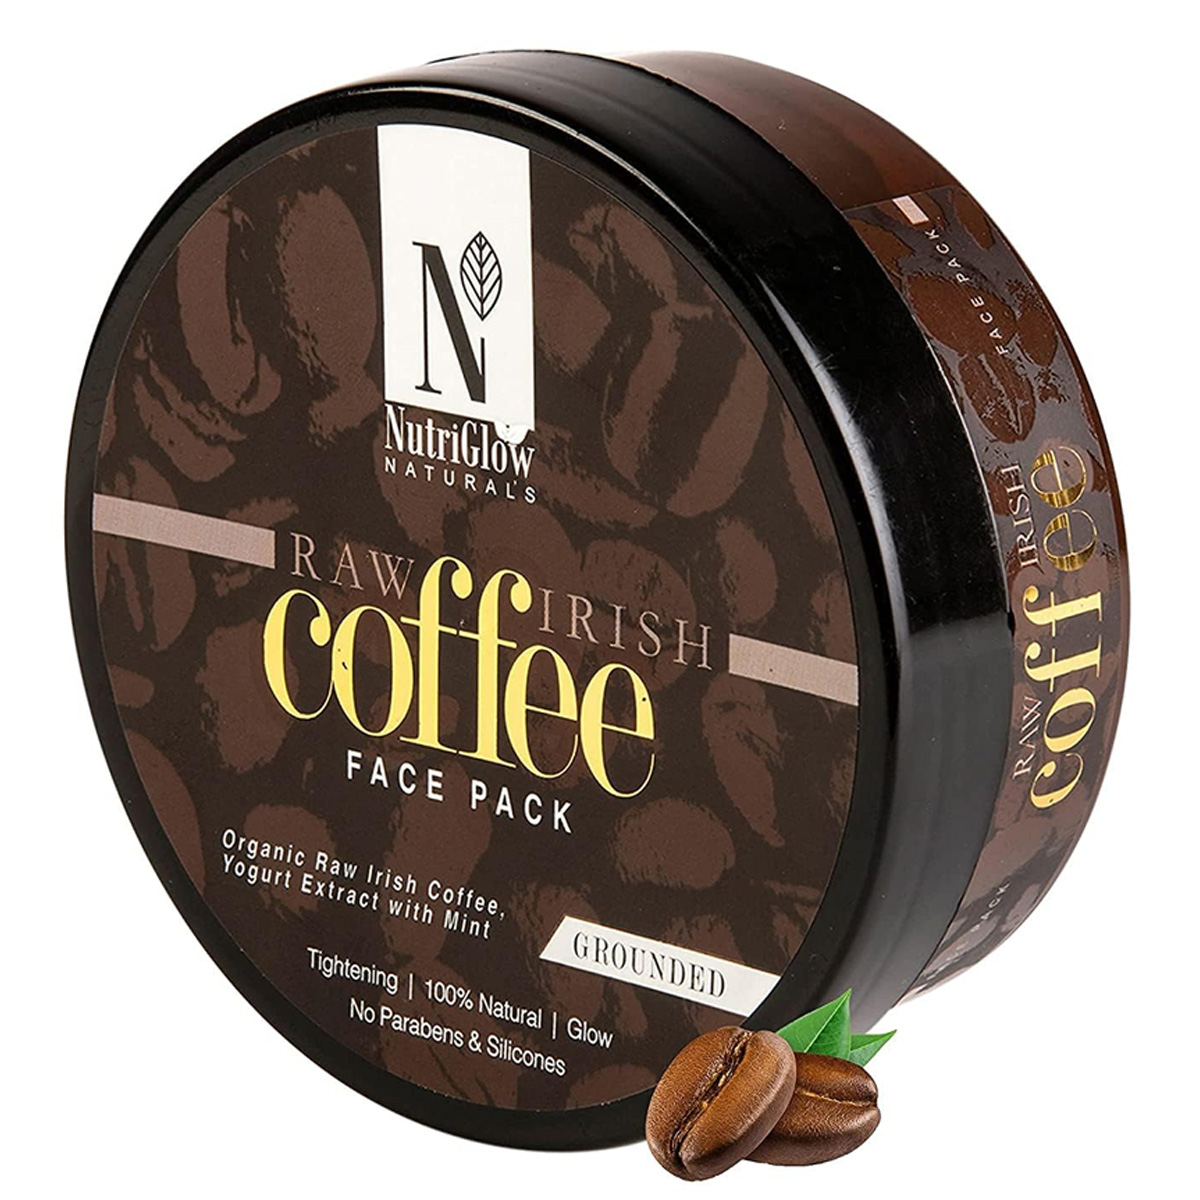 Nutriglow Natural's Raw Irish Coffee Face Pack, 200gm